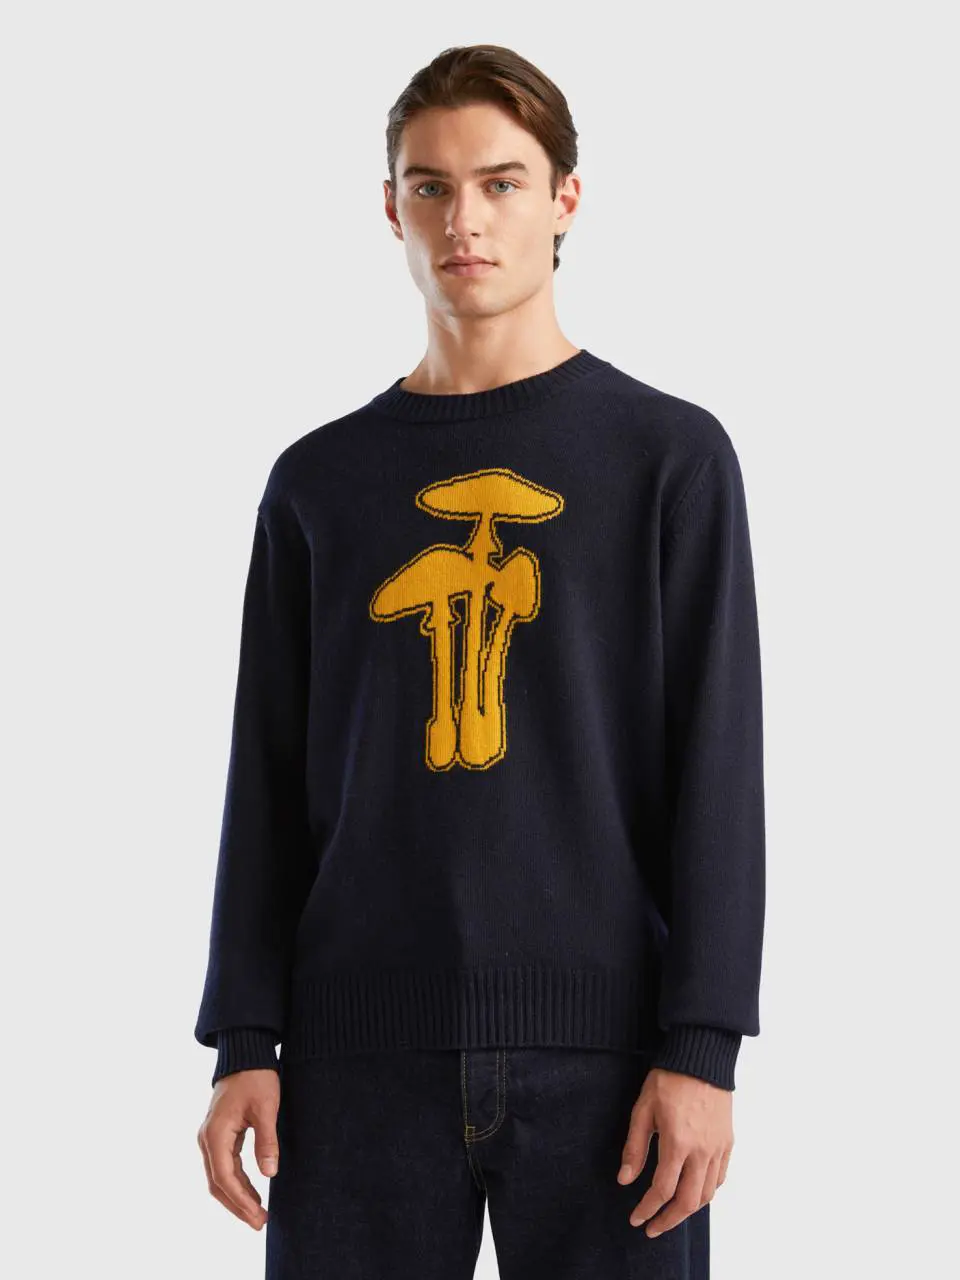 Benetton sweater with mushroom inlay. 1